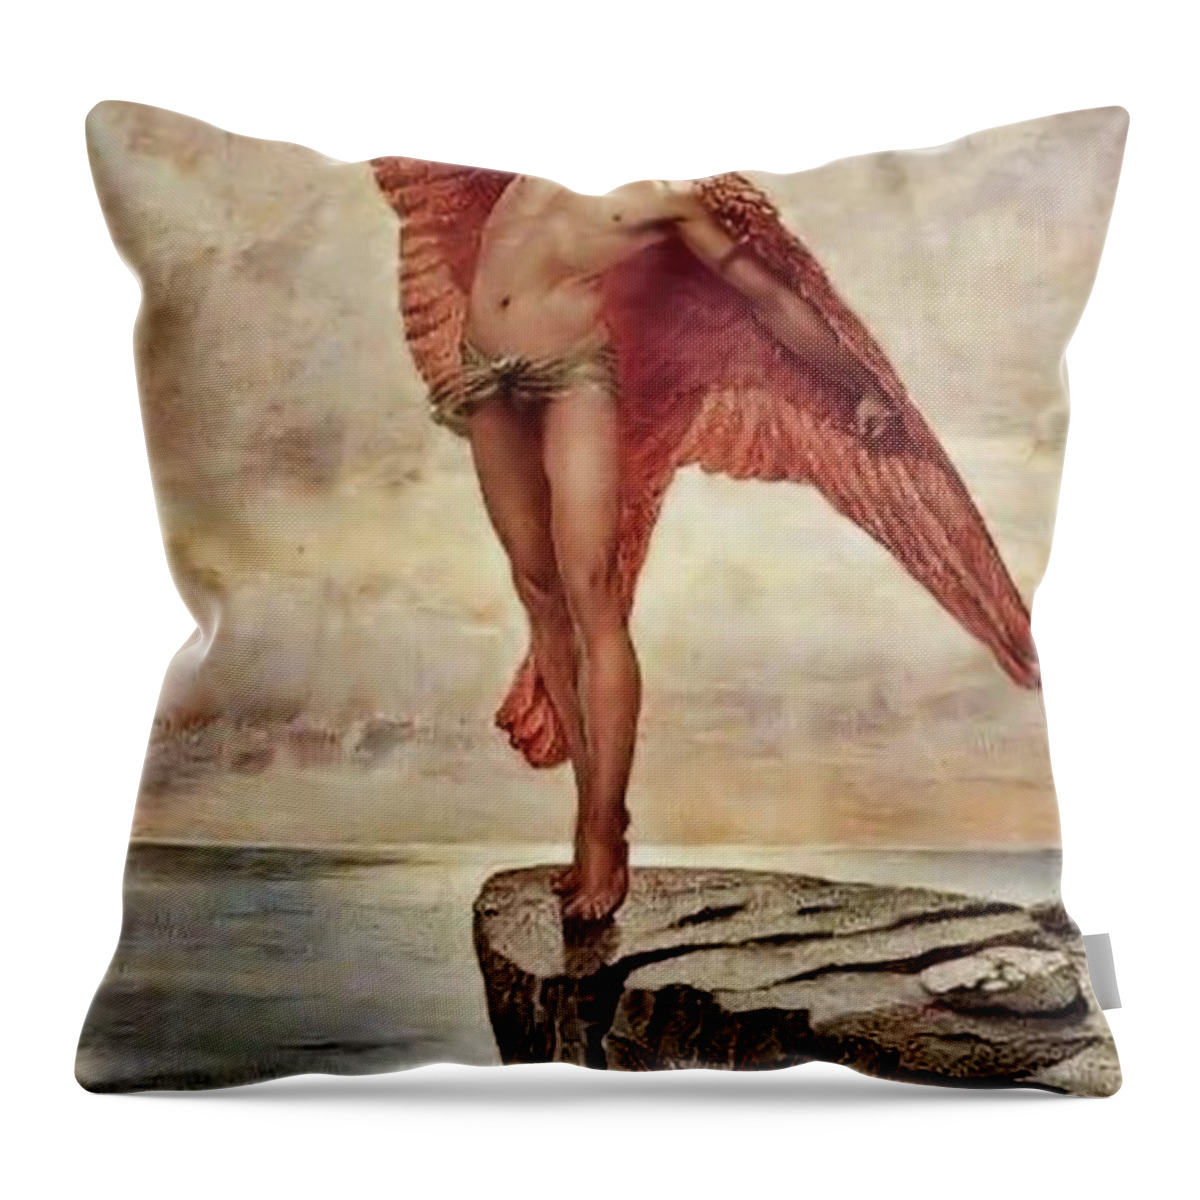 William Blake Richmond Throw Pillow featuring the painting Icarus by Richmond by William Blake Richmond